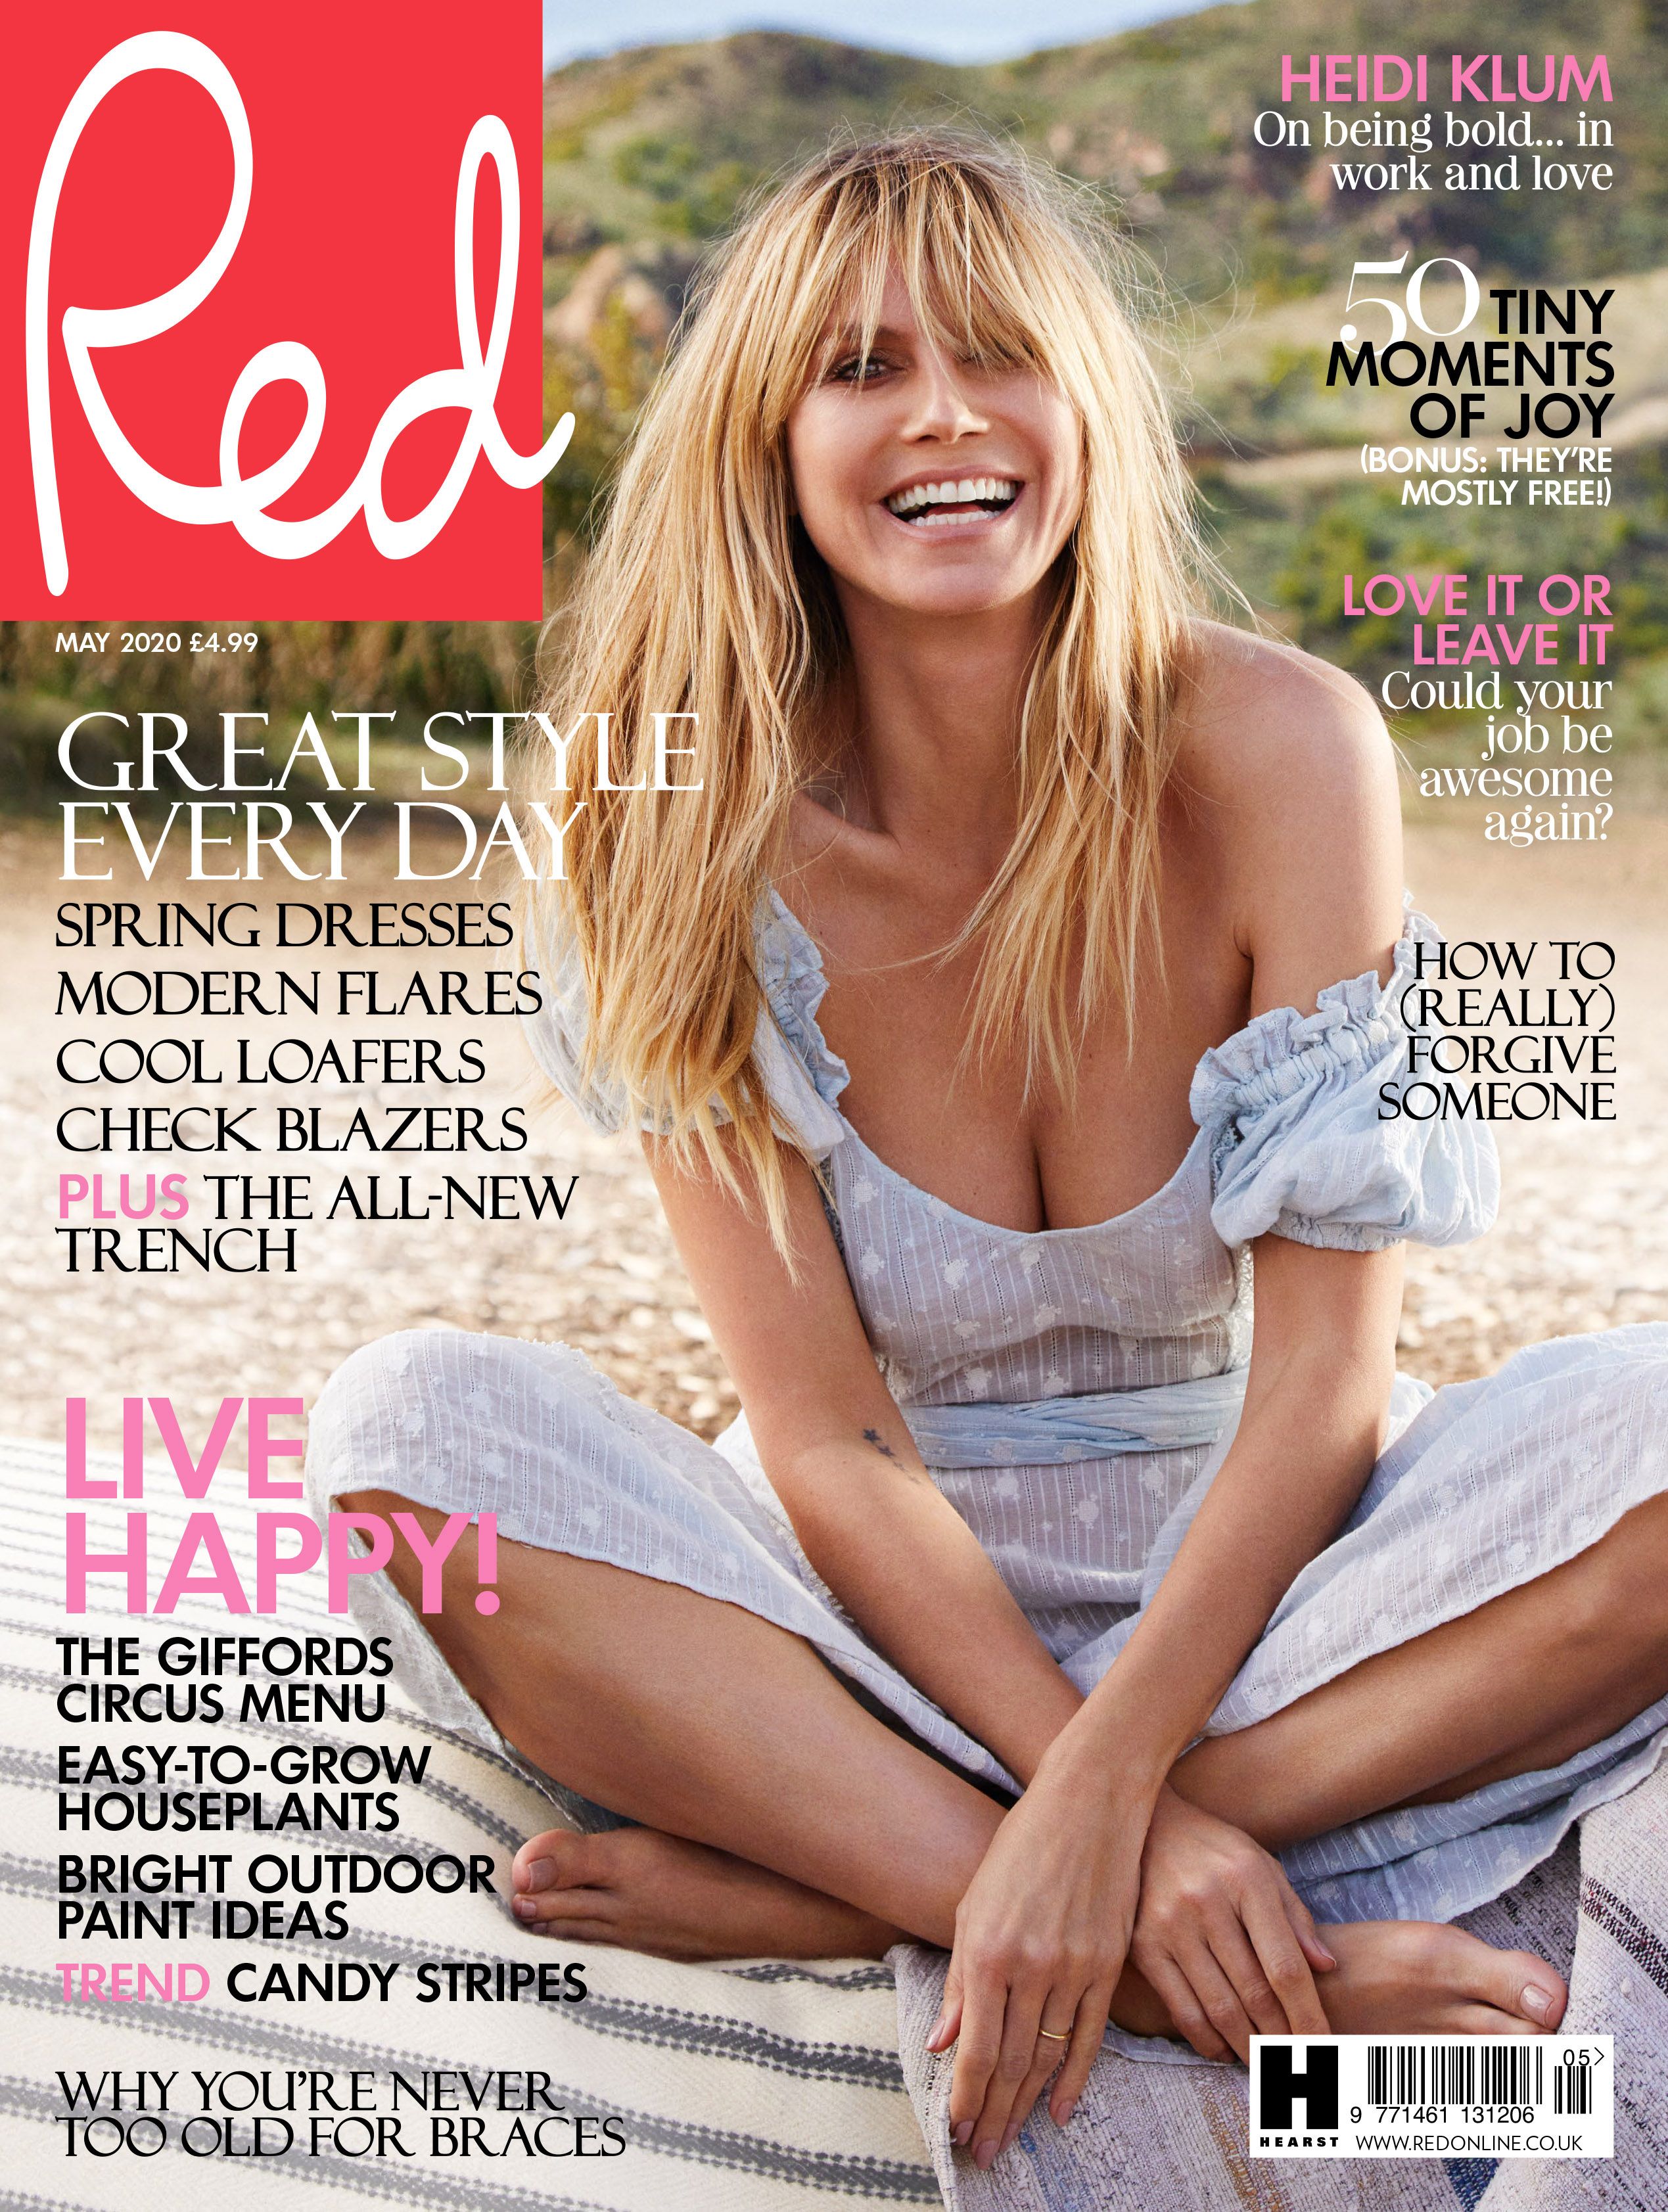 Photo n°1 : Heidi Klum dans Red Magazine!